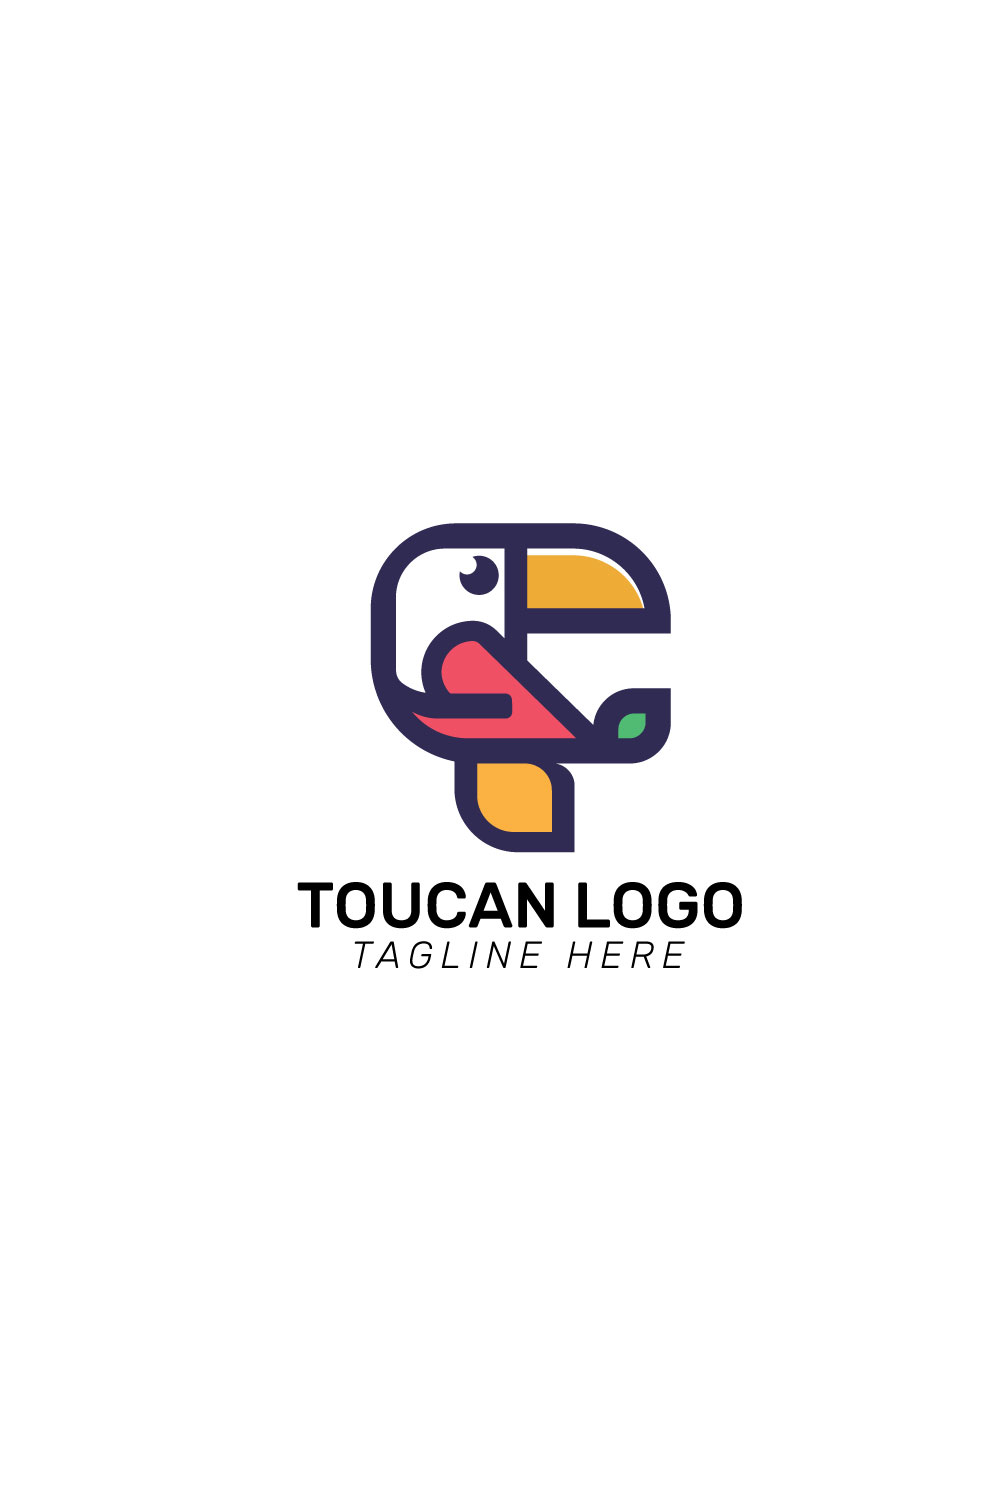 Toucan logo Tropical bird flat emblem design pinterest preview image.